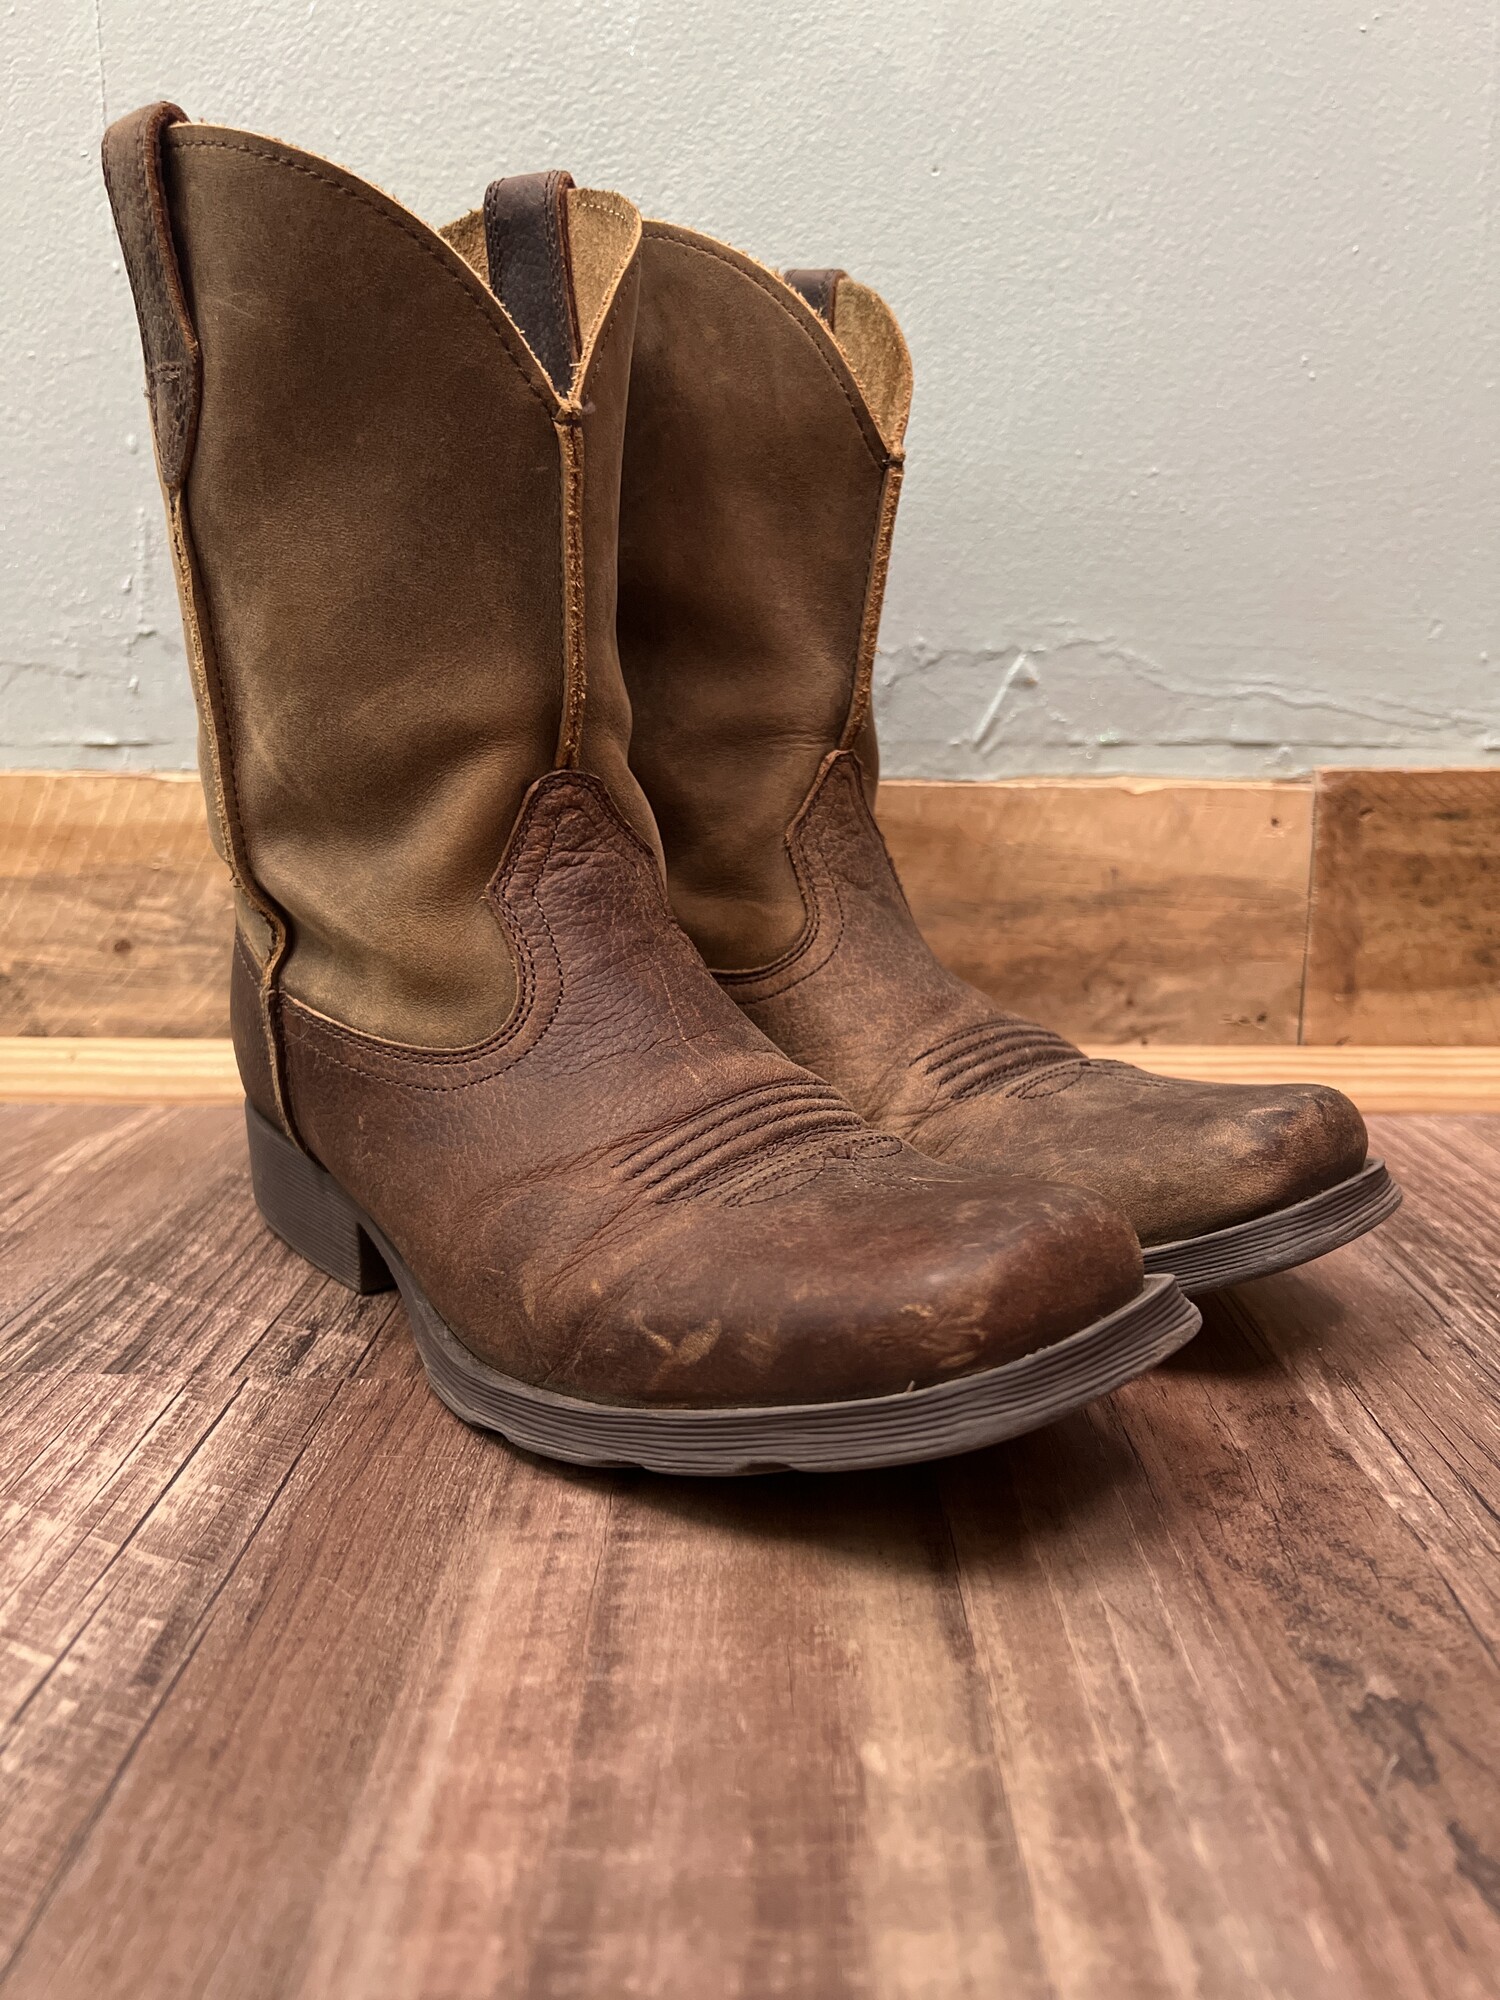 Ariat  Destressed Cowboy Boots, Brown, Size: Shoes 4